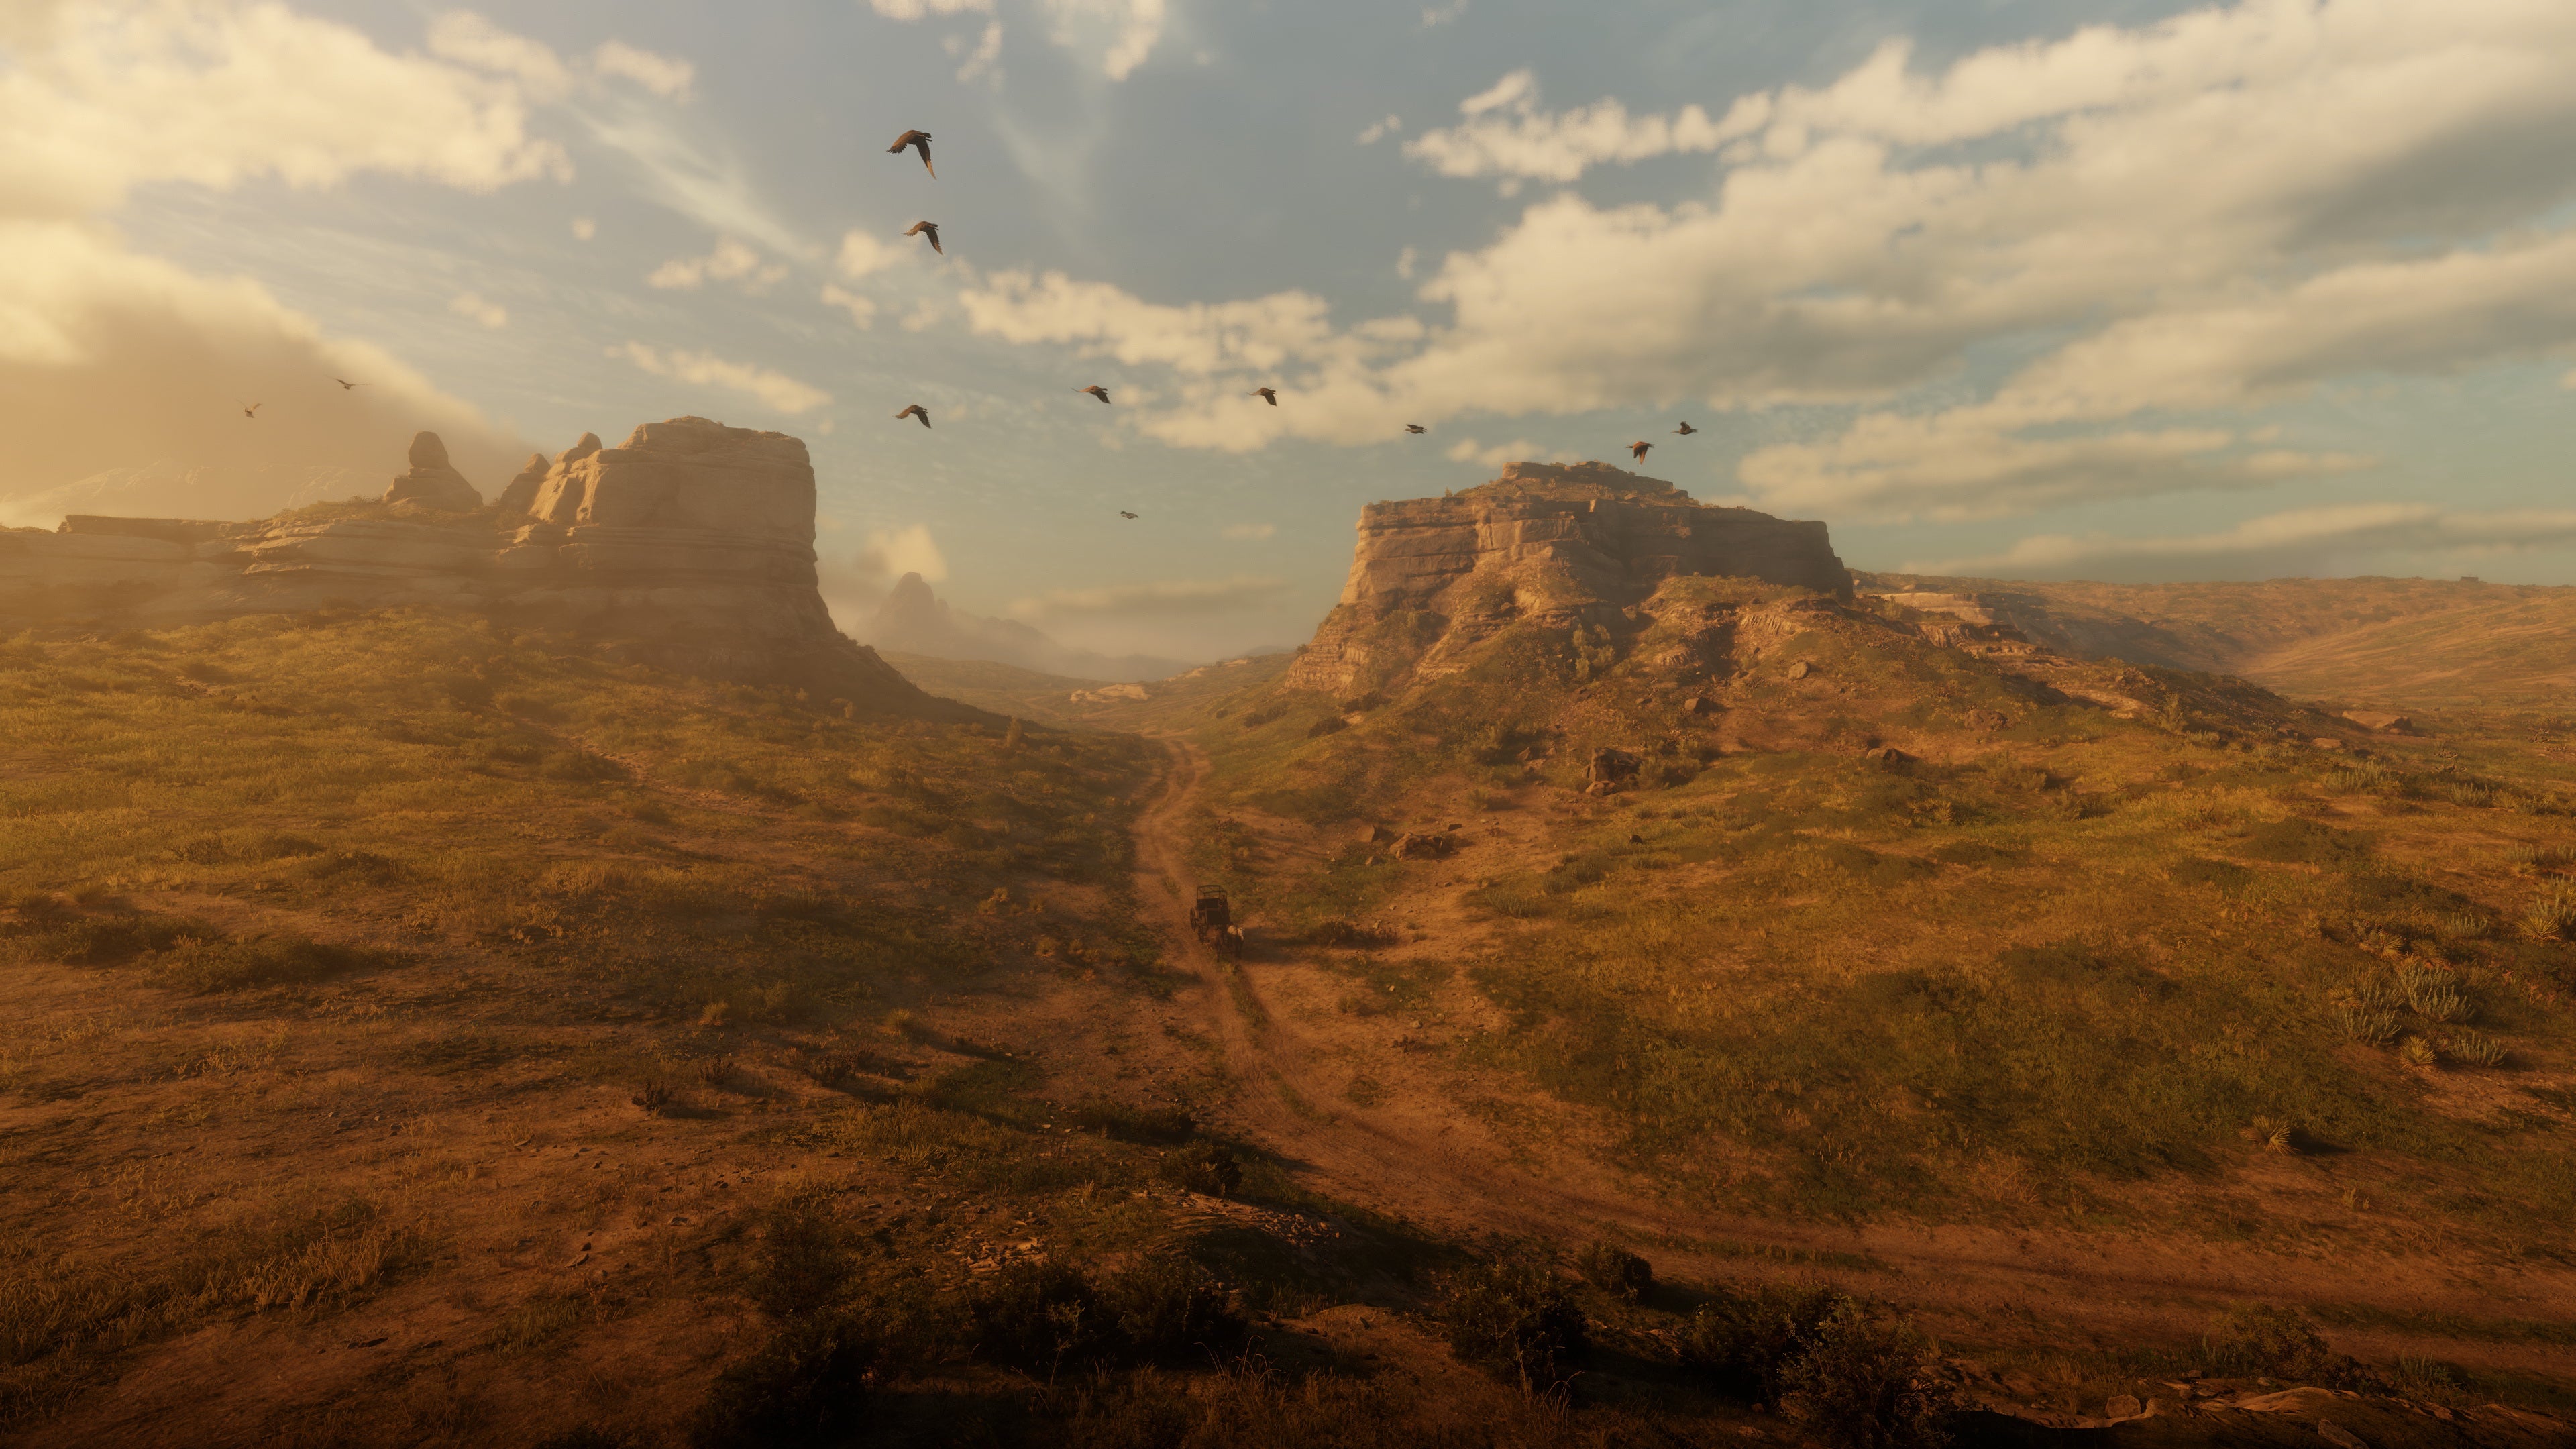 Скриншоты Red Dead Redemption 2 для ПК